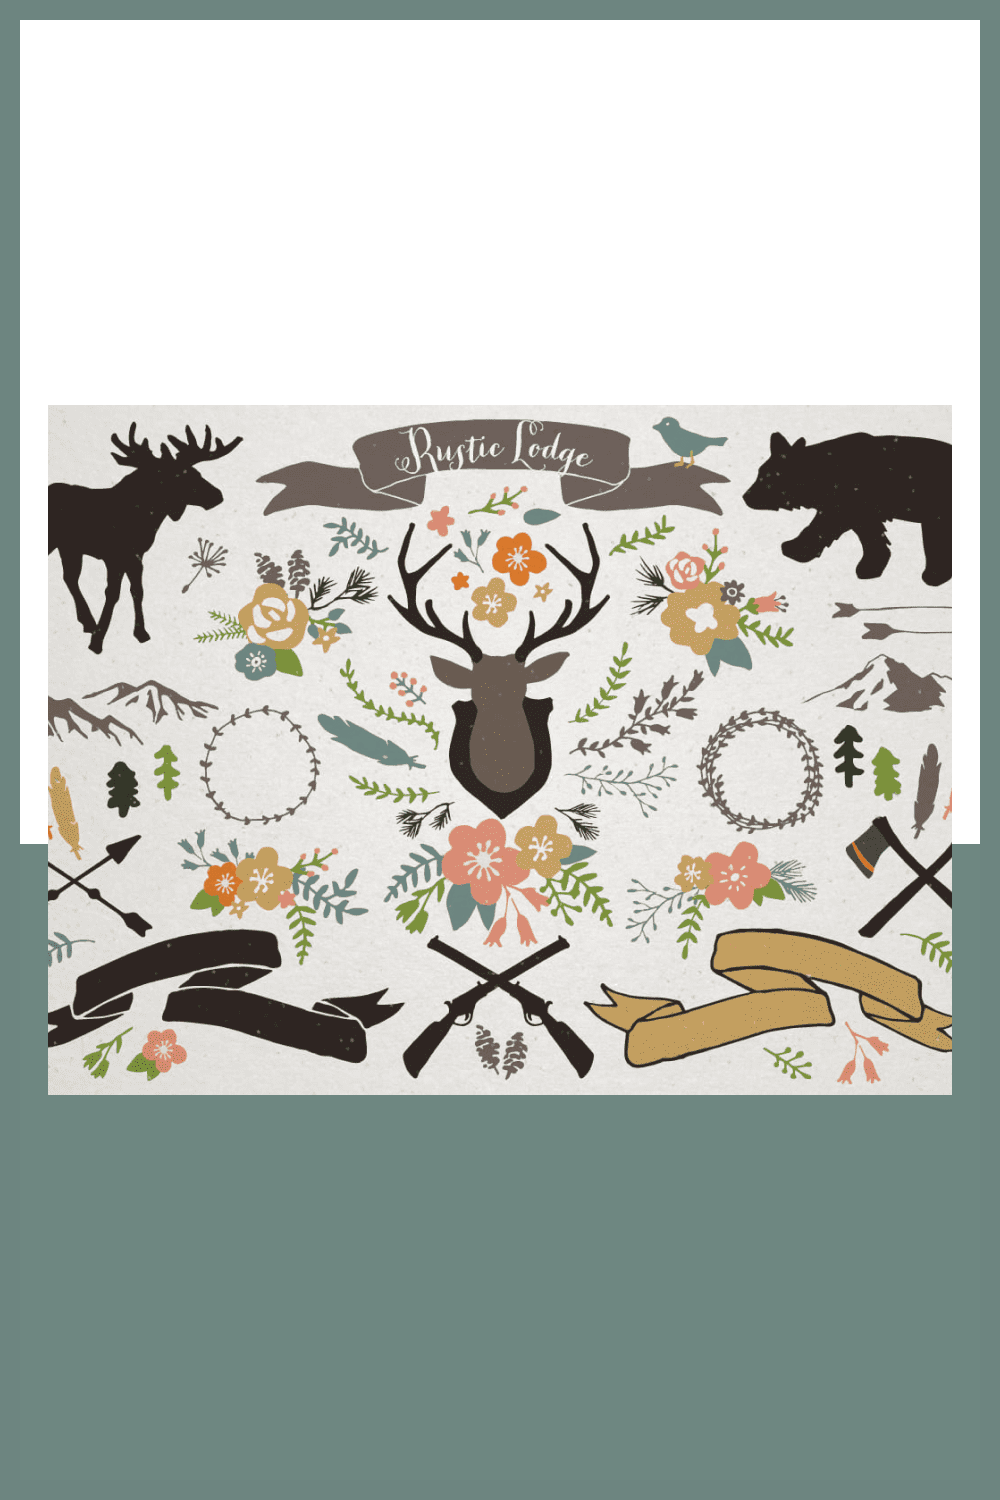 61 Rustic Mountain Lodge Illustrations - MasterBundles - Pinterest Collage Image.